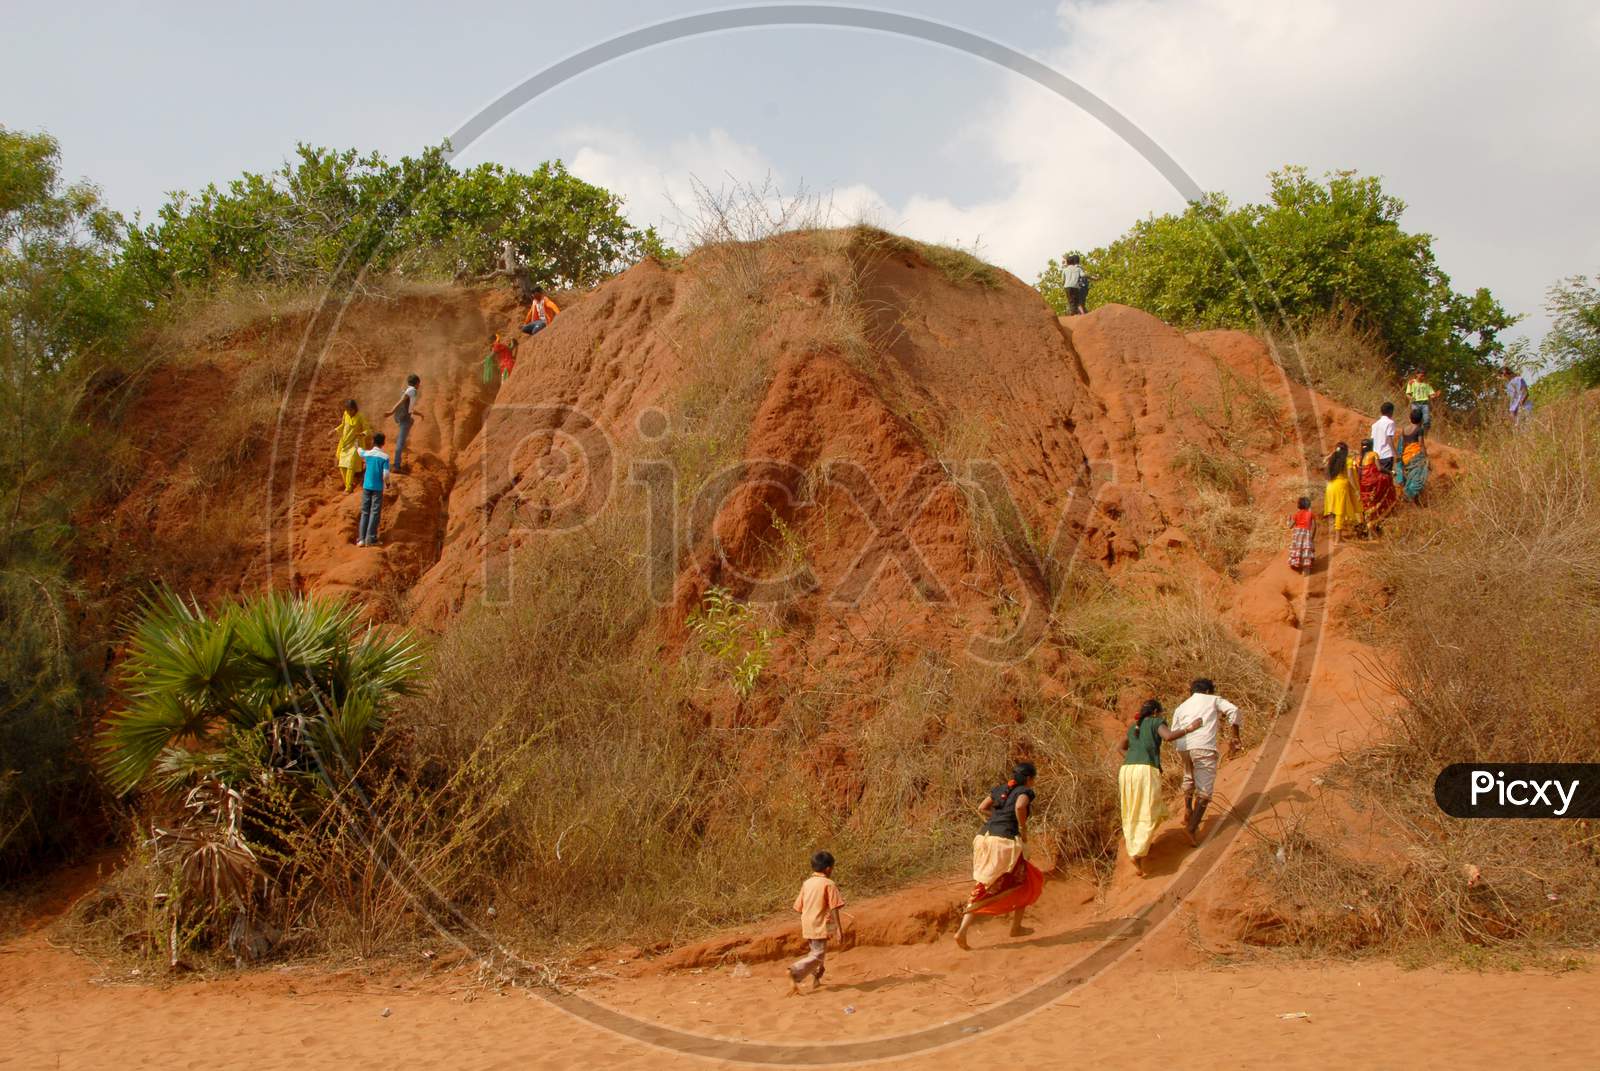 Indian Rural Village Children Climbing Sand Dunes At a River Bank